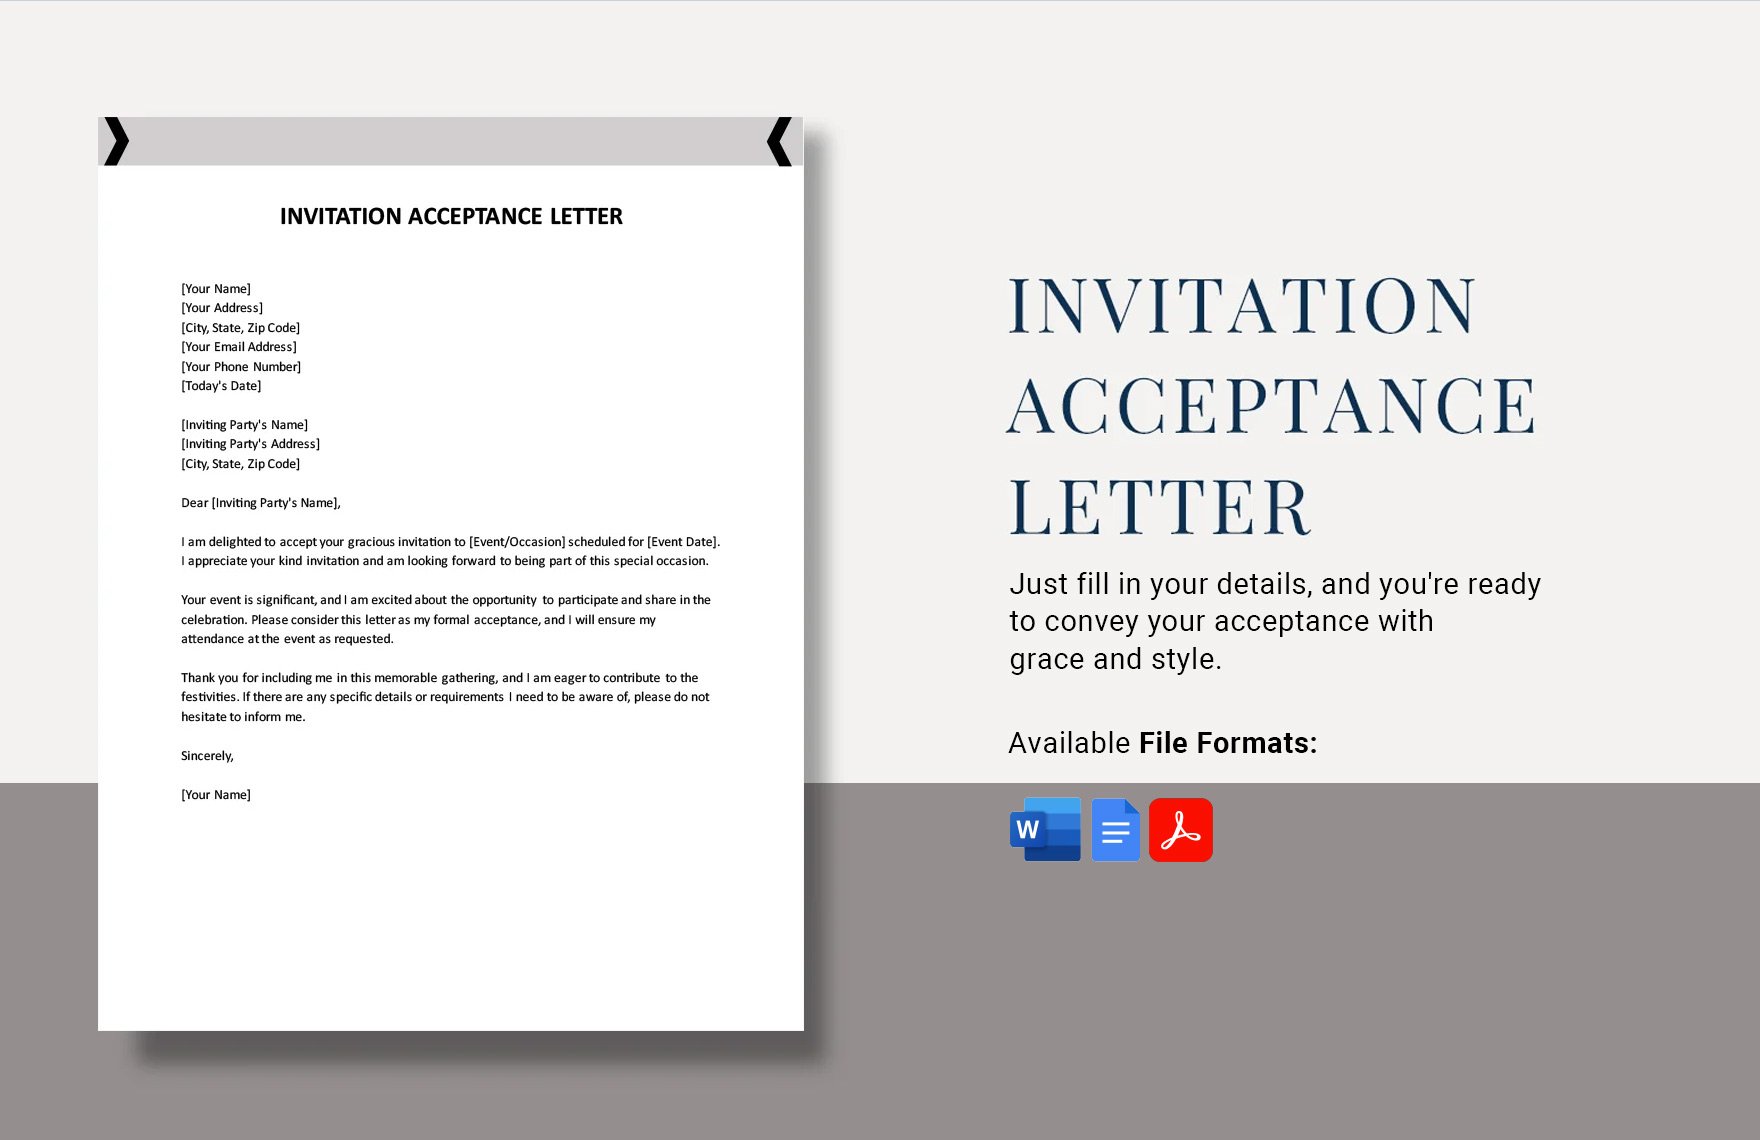 Invitation Acceptance Letter in Word, Google Docs, PDF